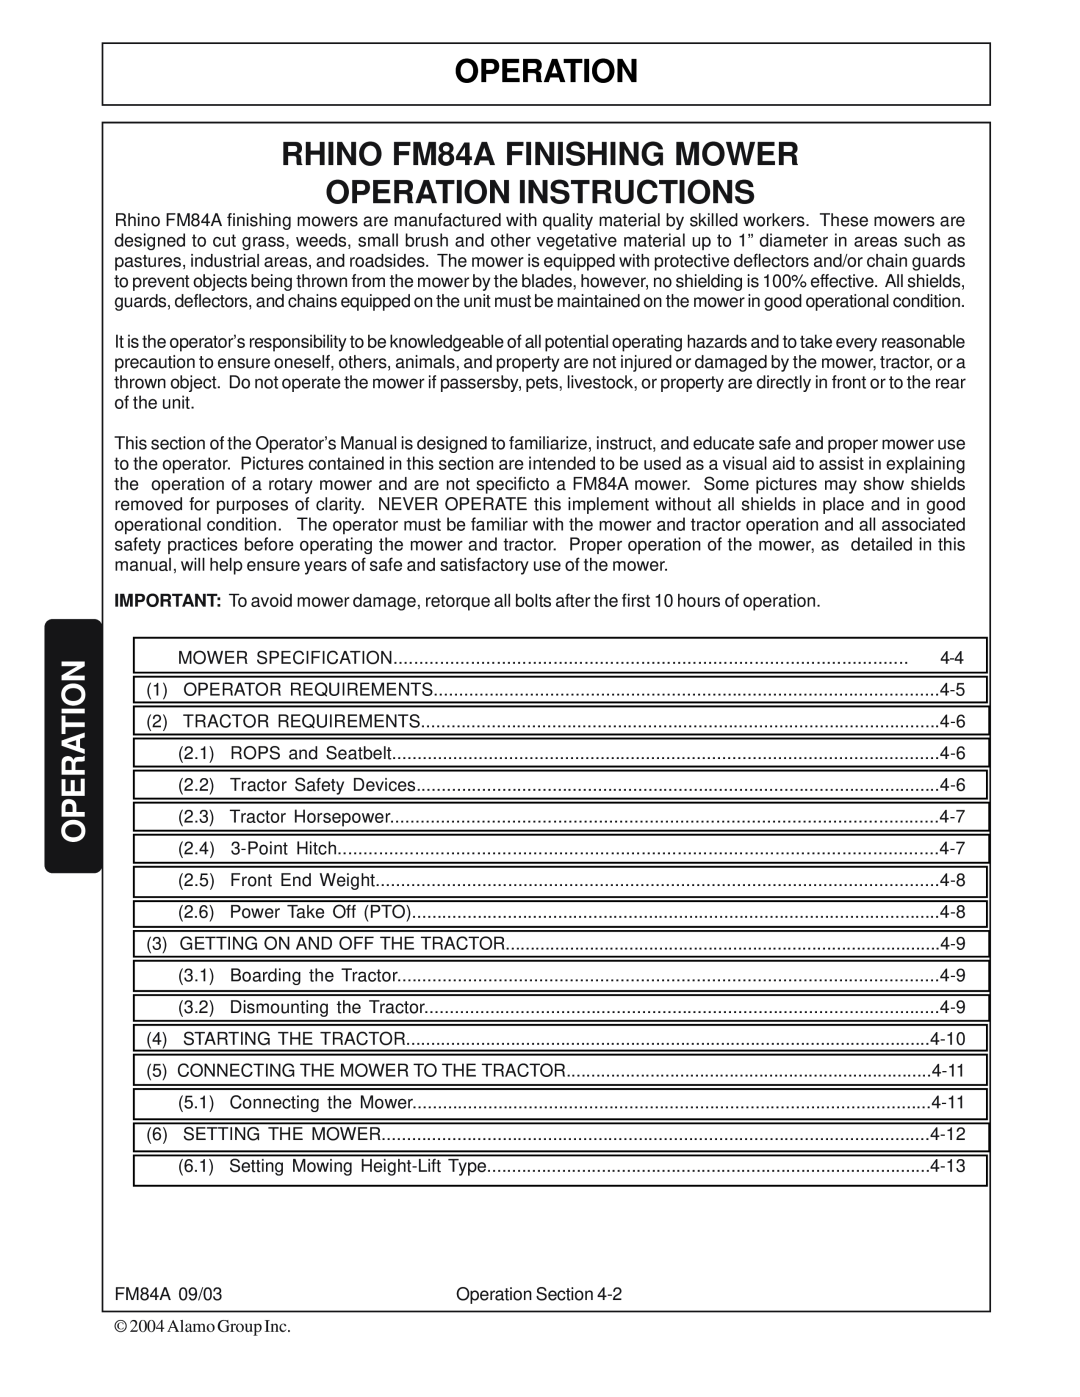 Servis-Rhino manual OPERATION RHINO FM84A FINISHING MOWER, Operation Instructions 